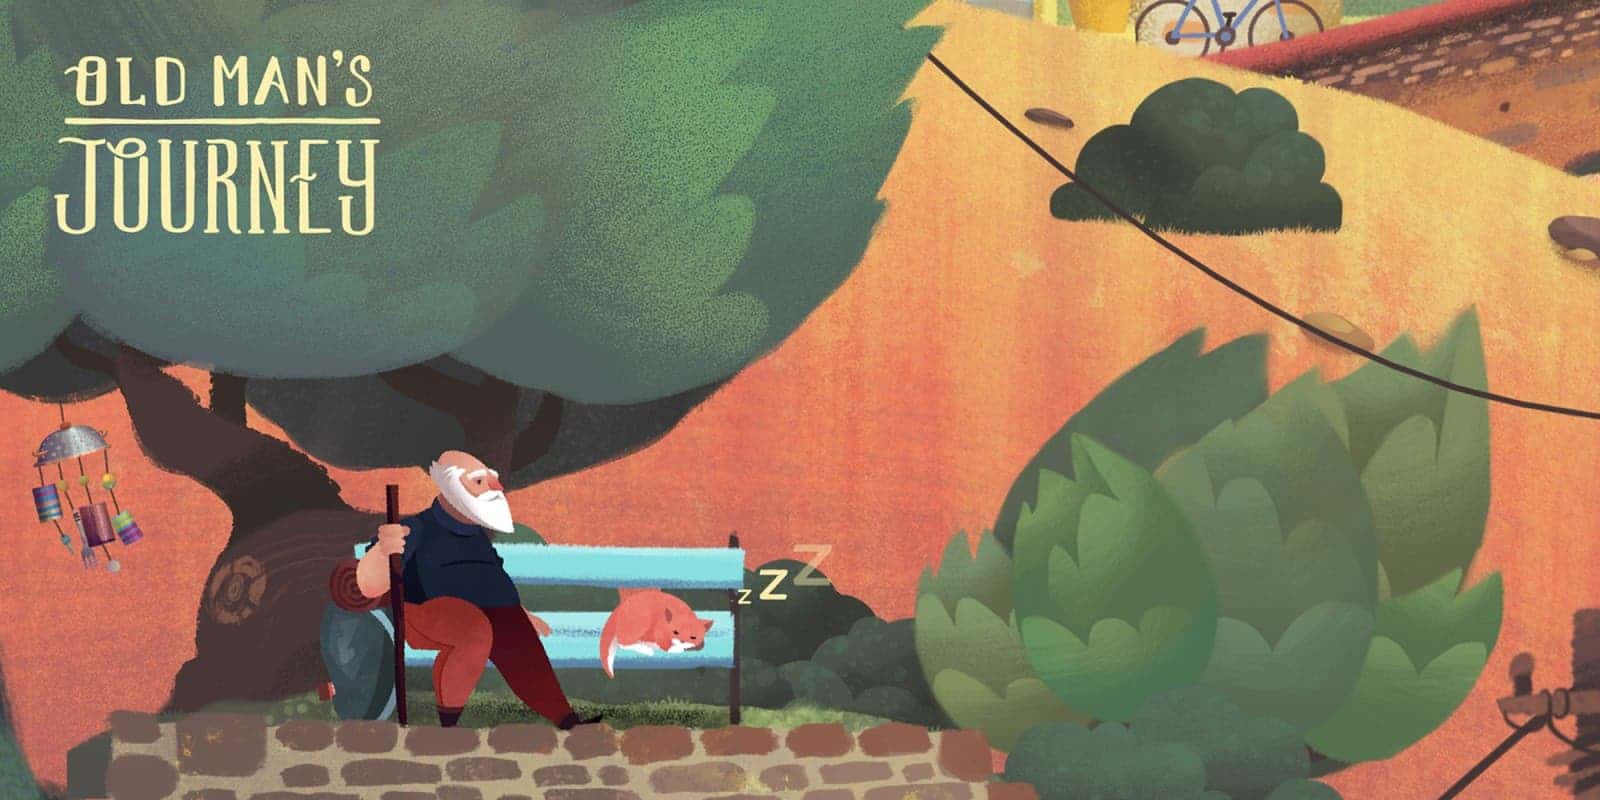 Old Man's Journey offline na laro para sa iOS